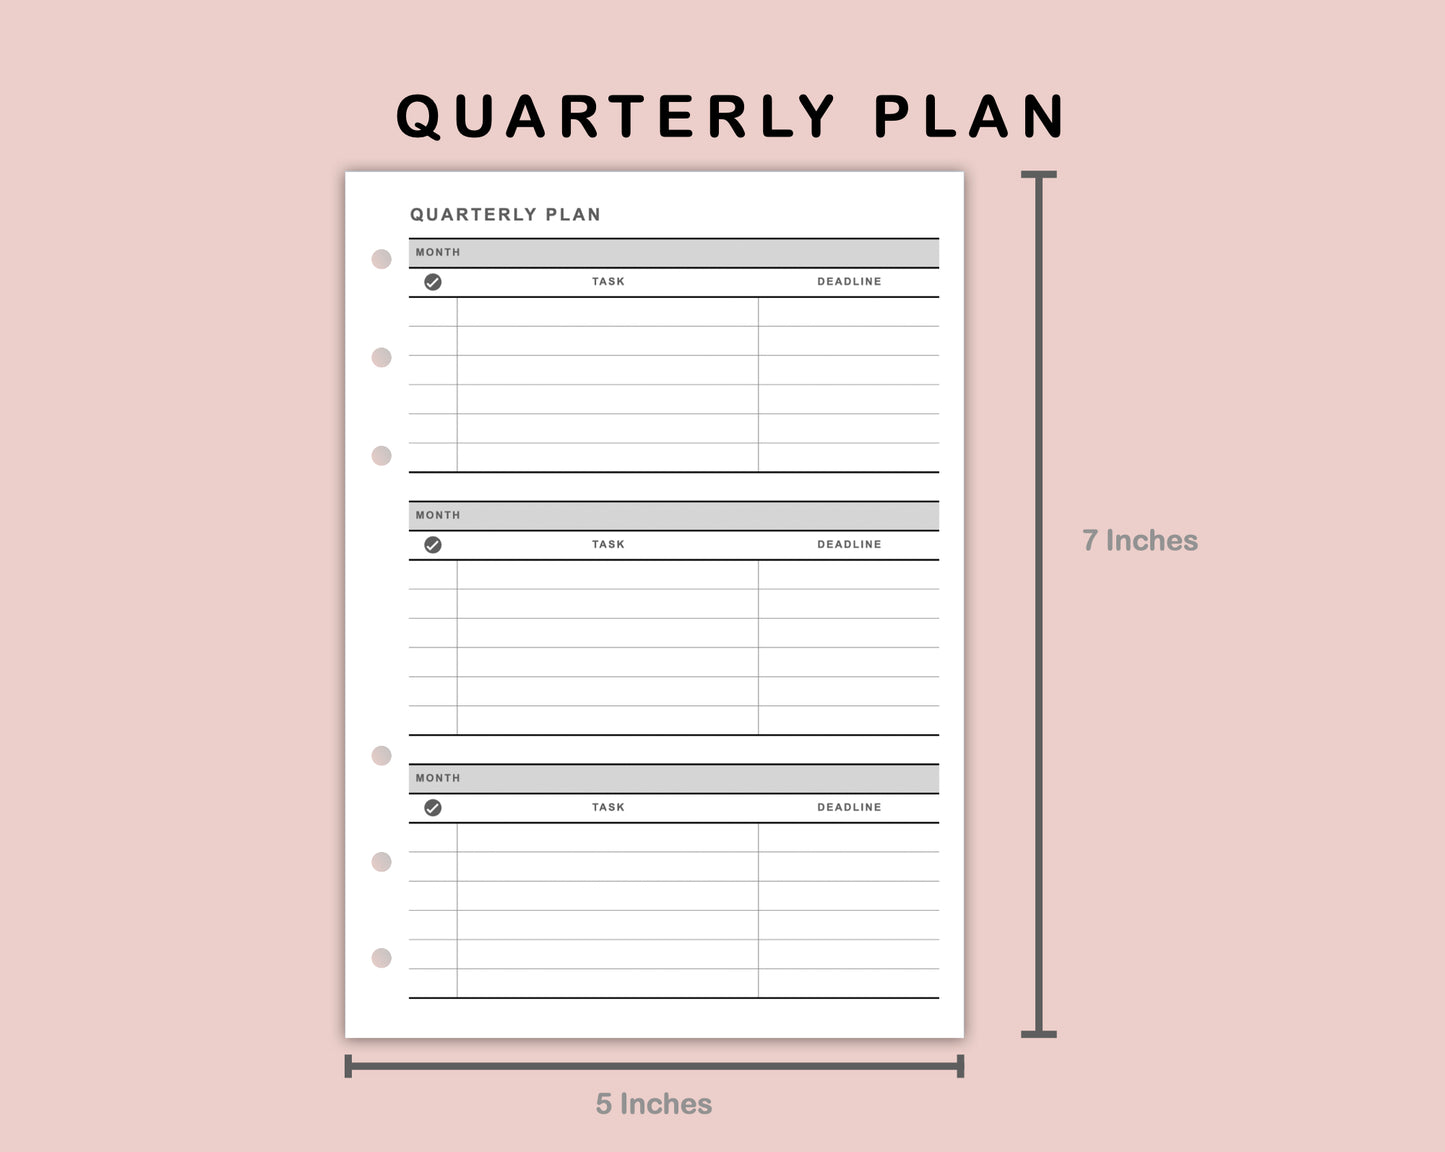 B6 Inserts - Quarterly Plan